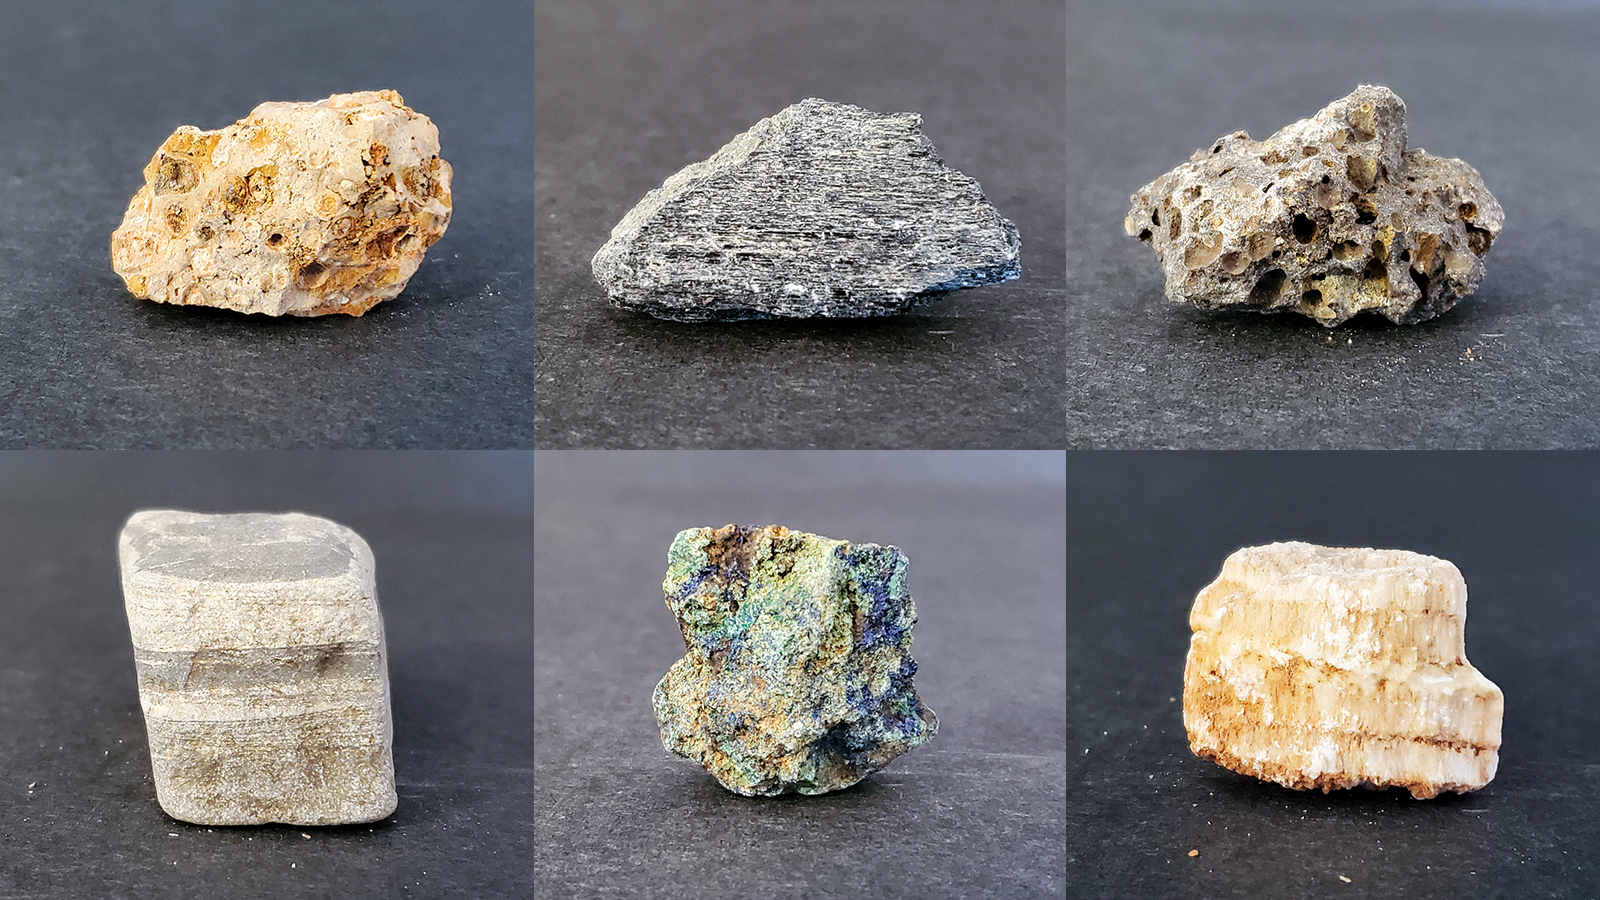 Student Project: Describe Rocks Like a NASA Scientist